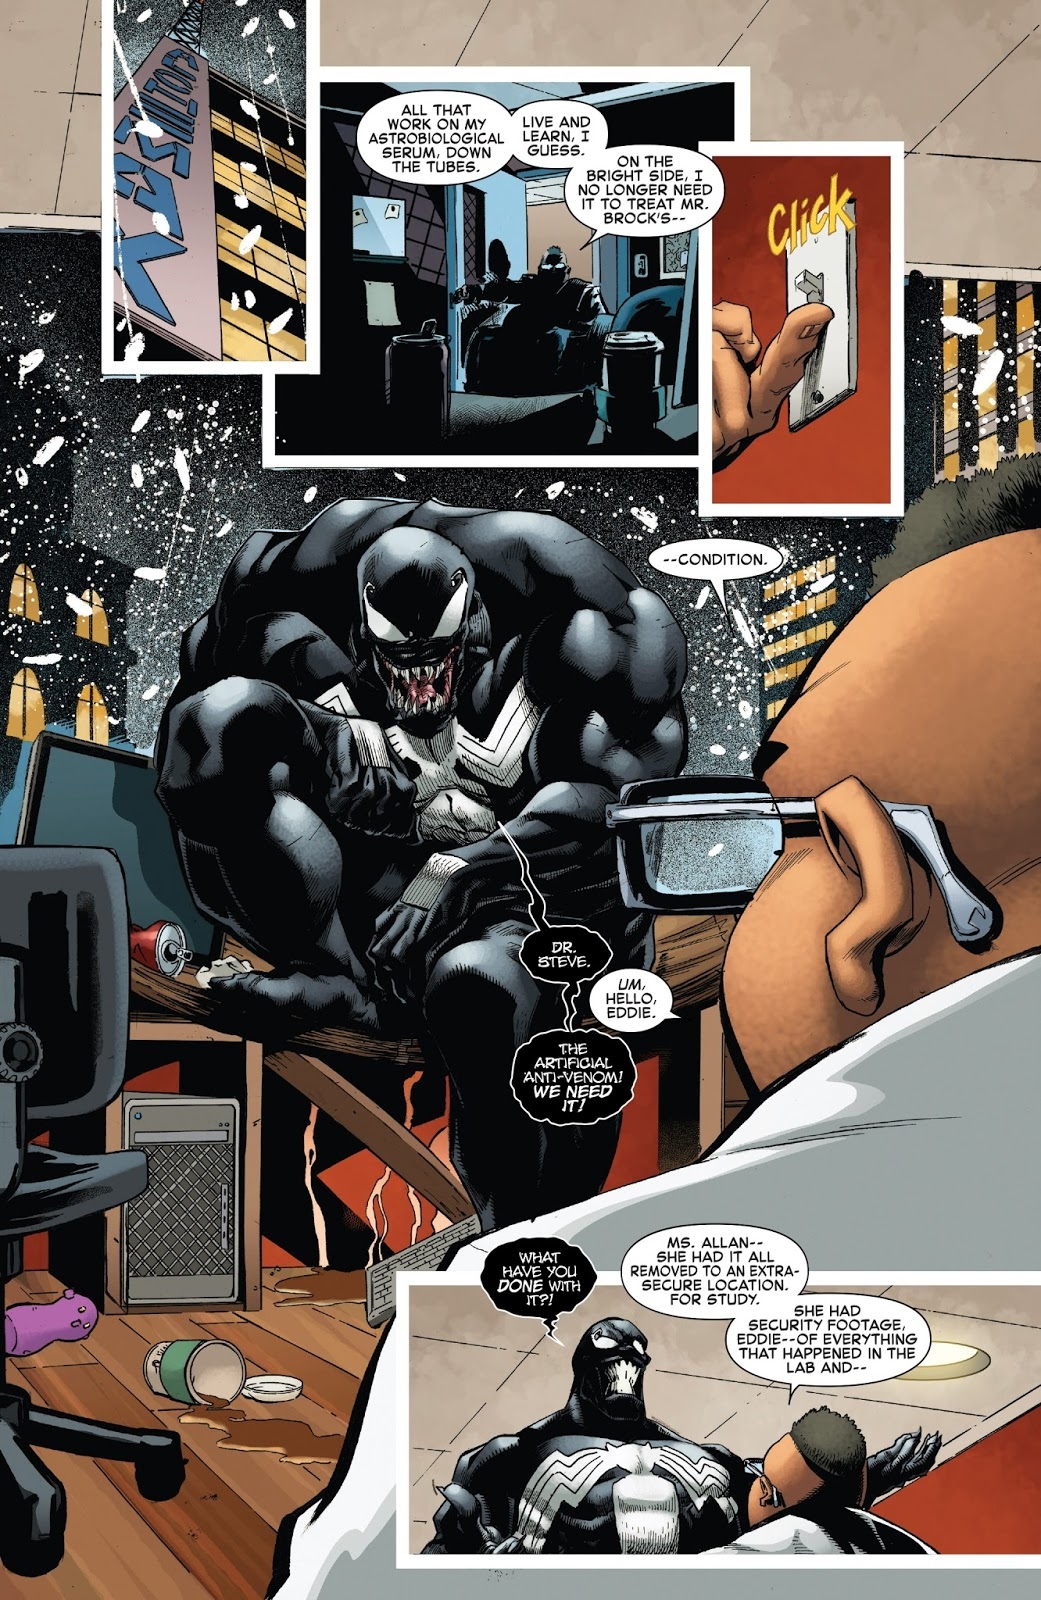 Amazing Spider-Man #793 pg 9 by Ryan Stegman (ft Venom), in K